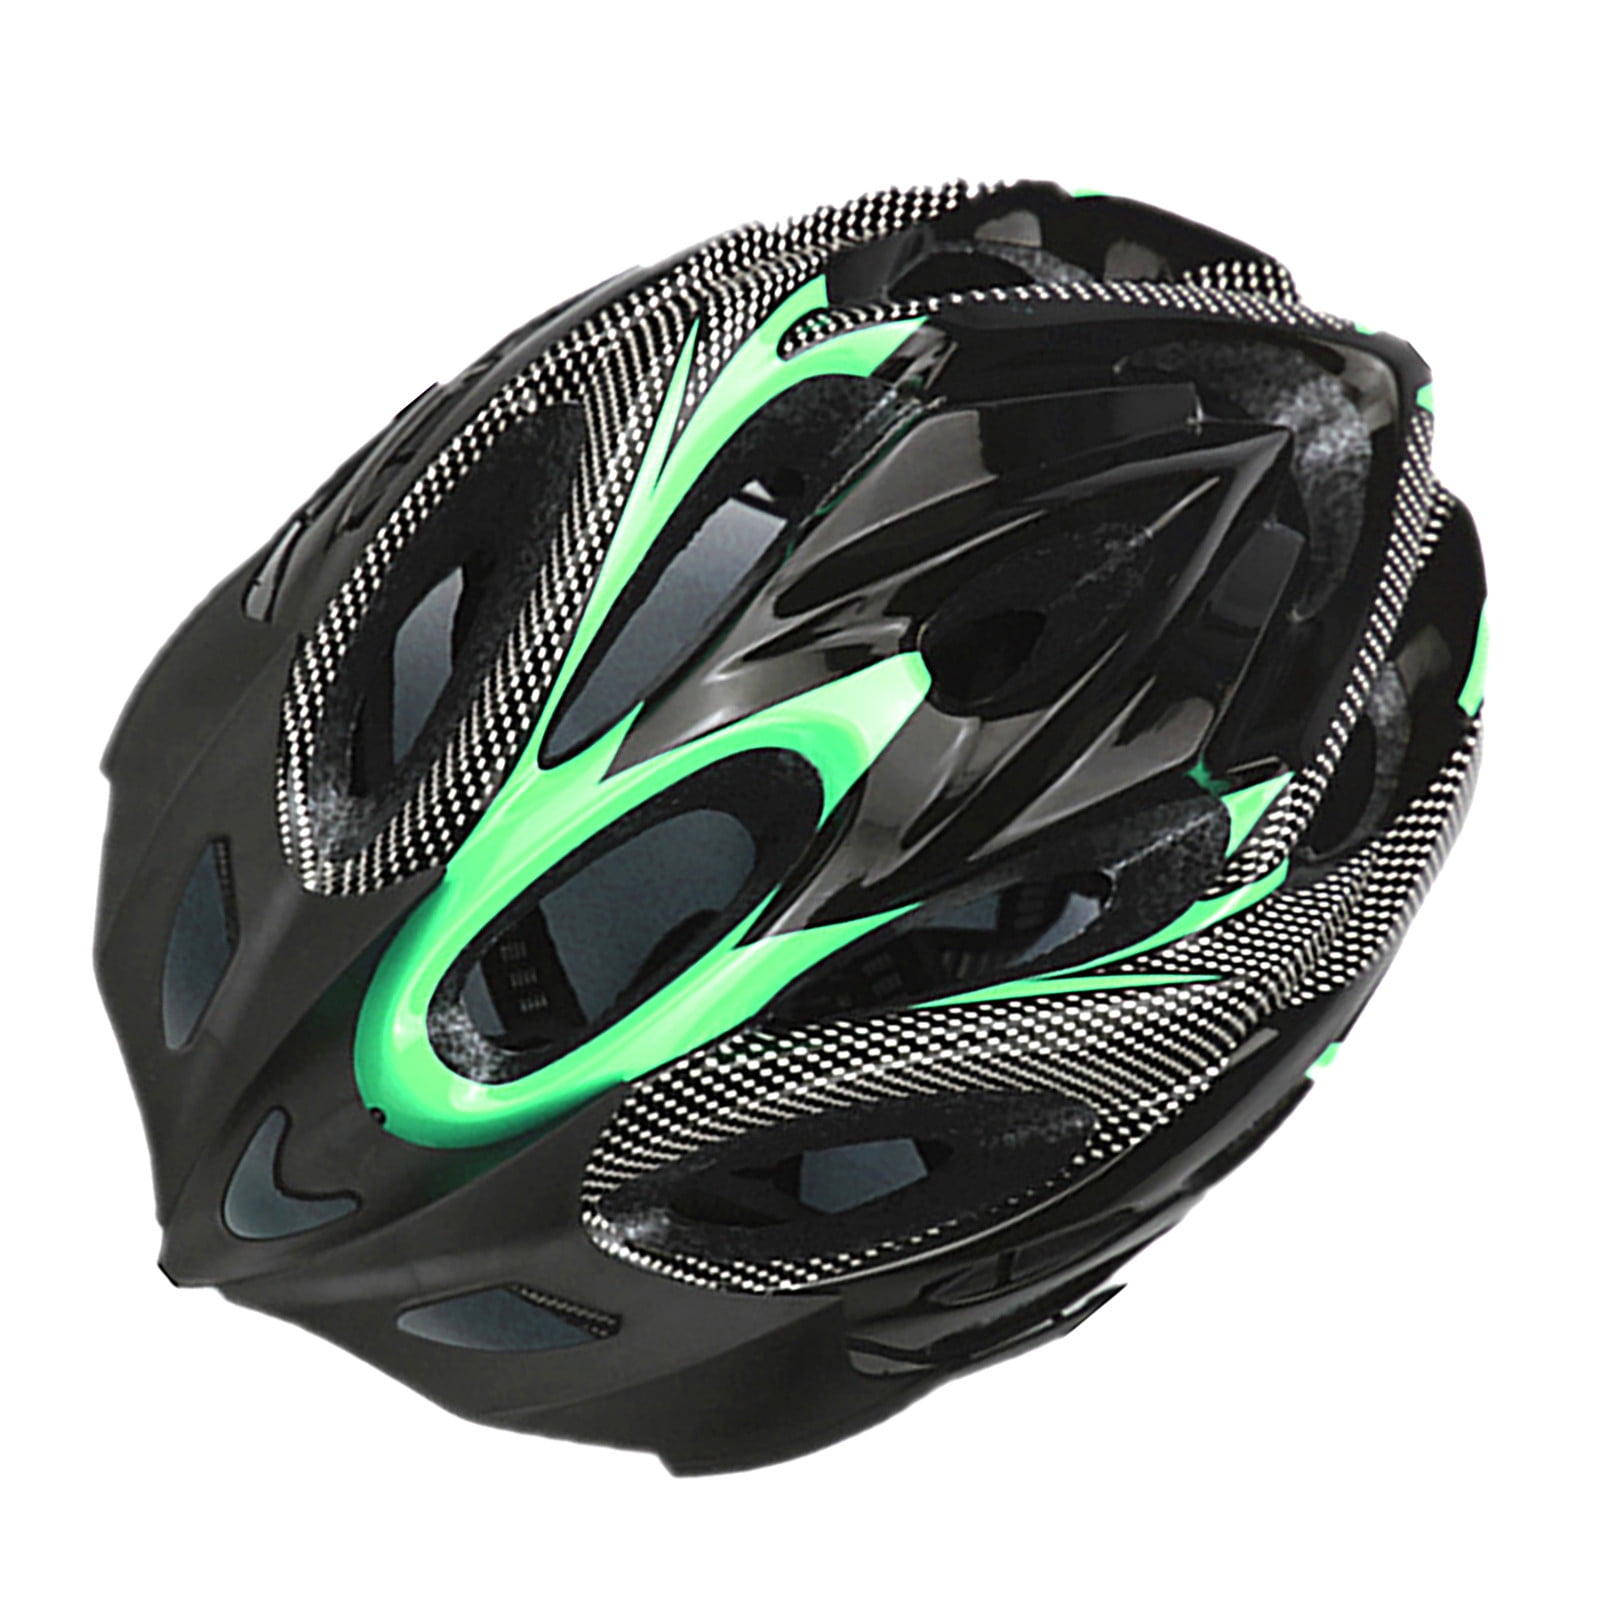 Adjustable Bicycle Helmet Bike Cycling Mountain Skate Safety Racing Adult Kids 